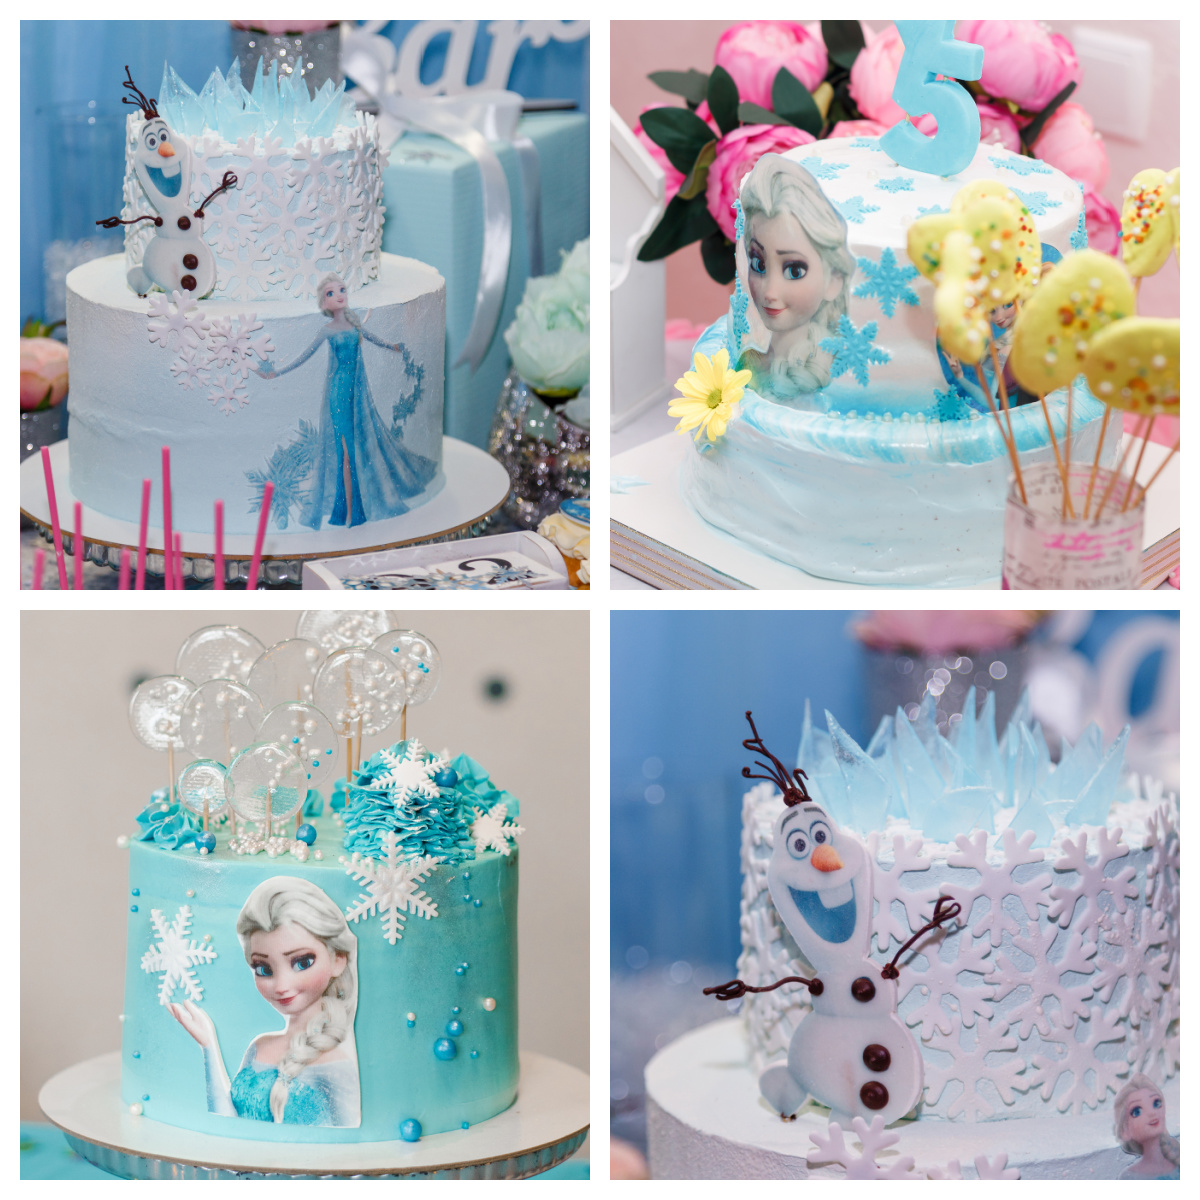 Disney Frozen Cake Recipe is a Perfect Frozen Themed Idea  Easy Family Recipe  Ideas